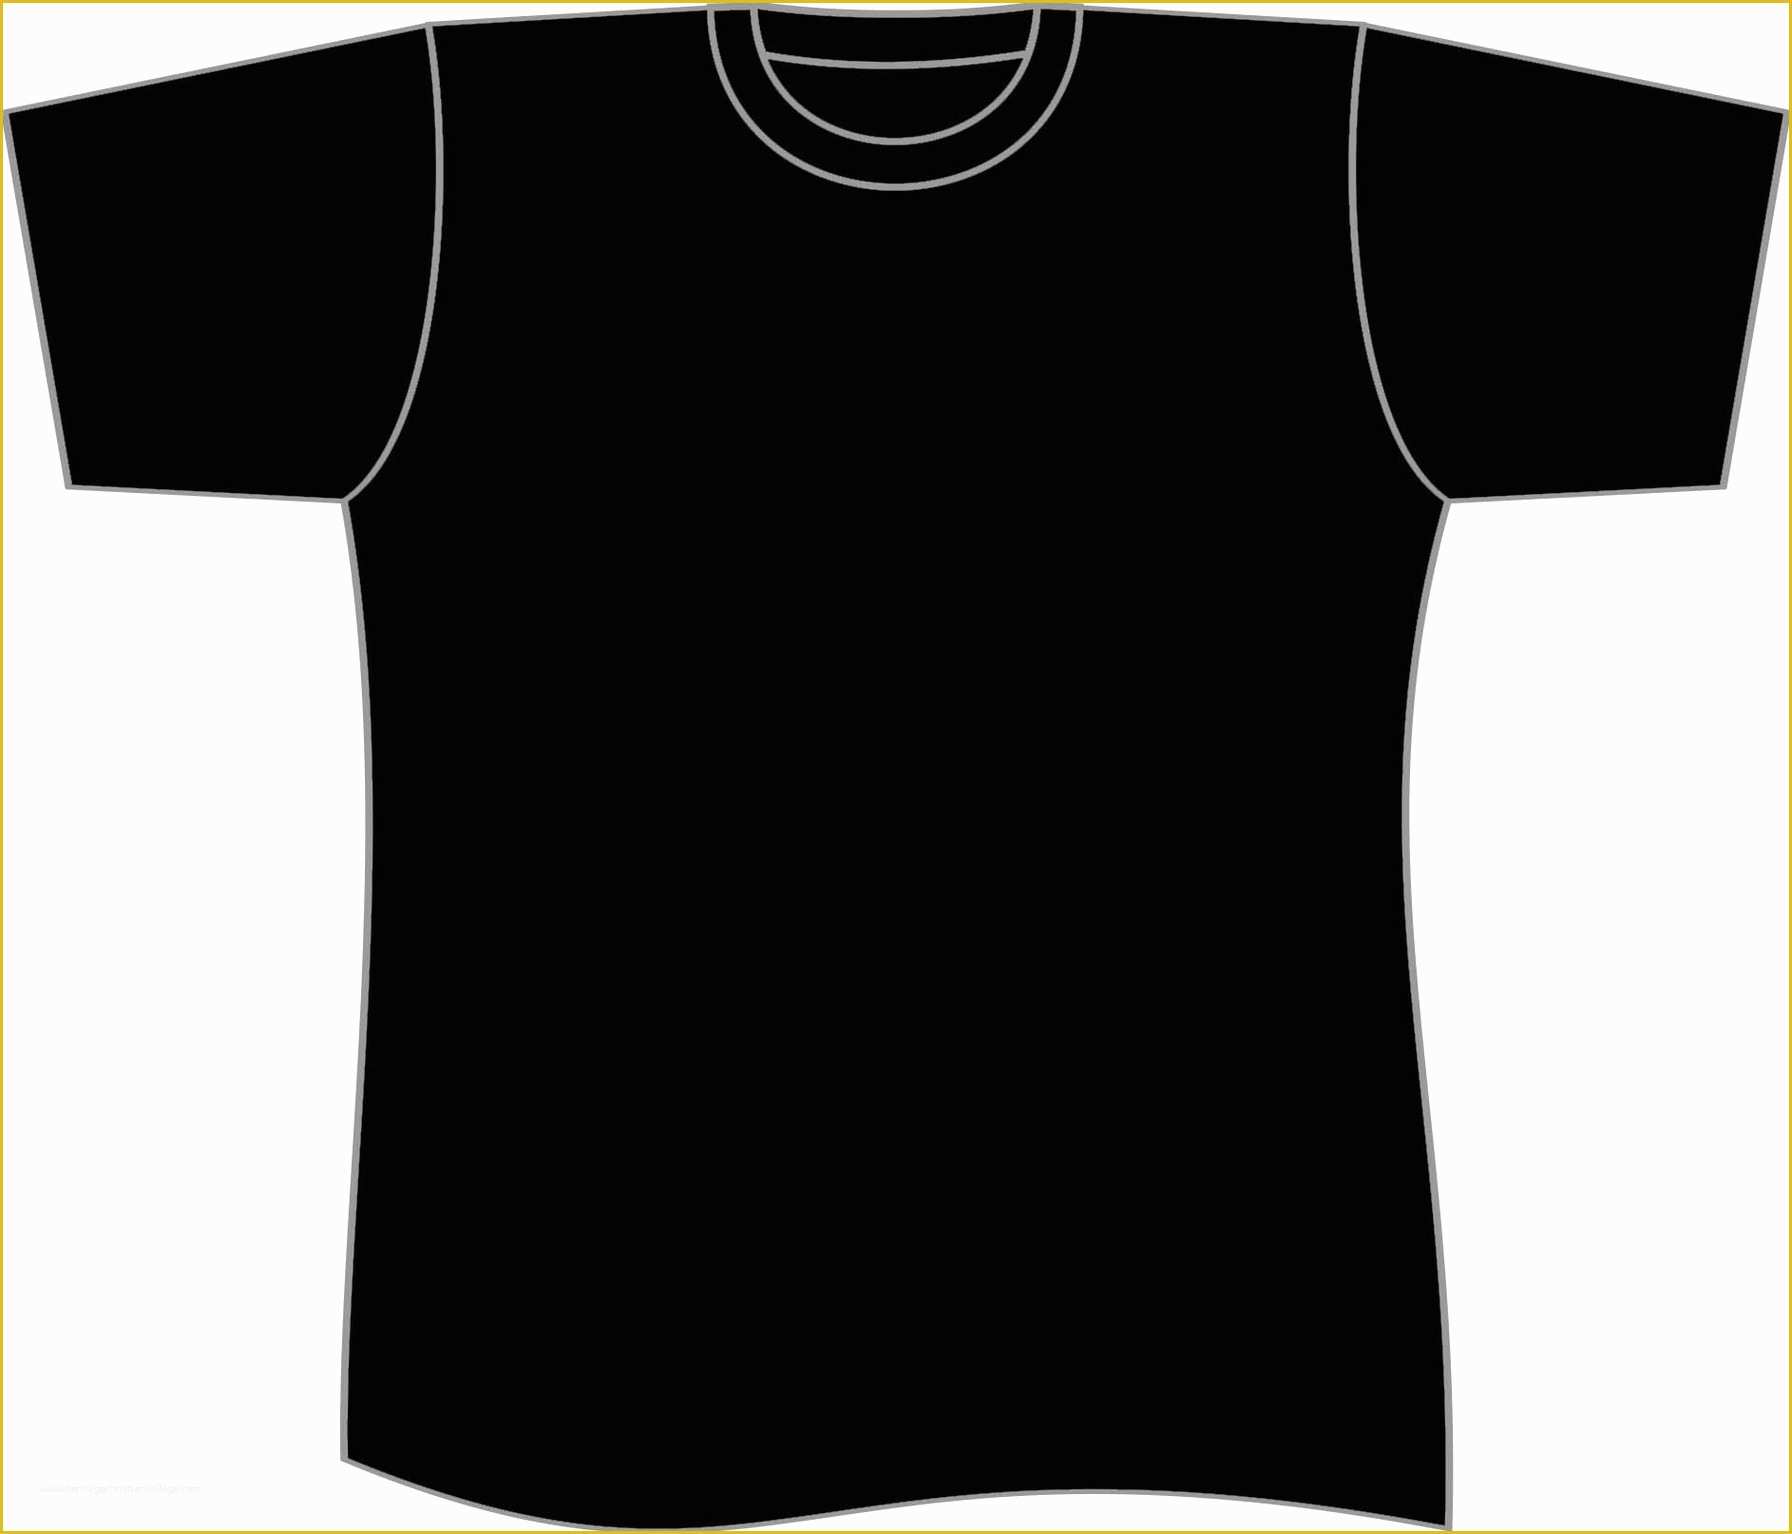 Free Shirt Templates Of Black T Shirt Clip Art to Pin On Pinterest